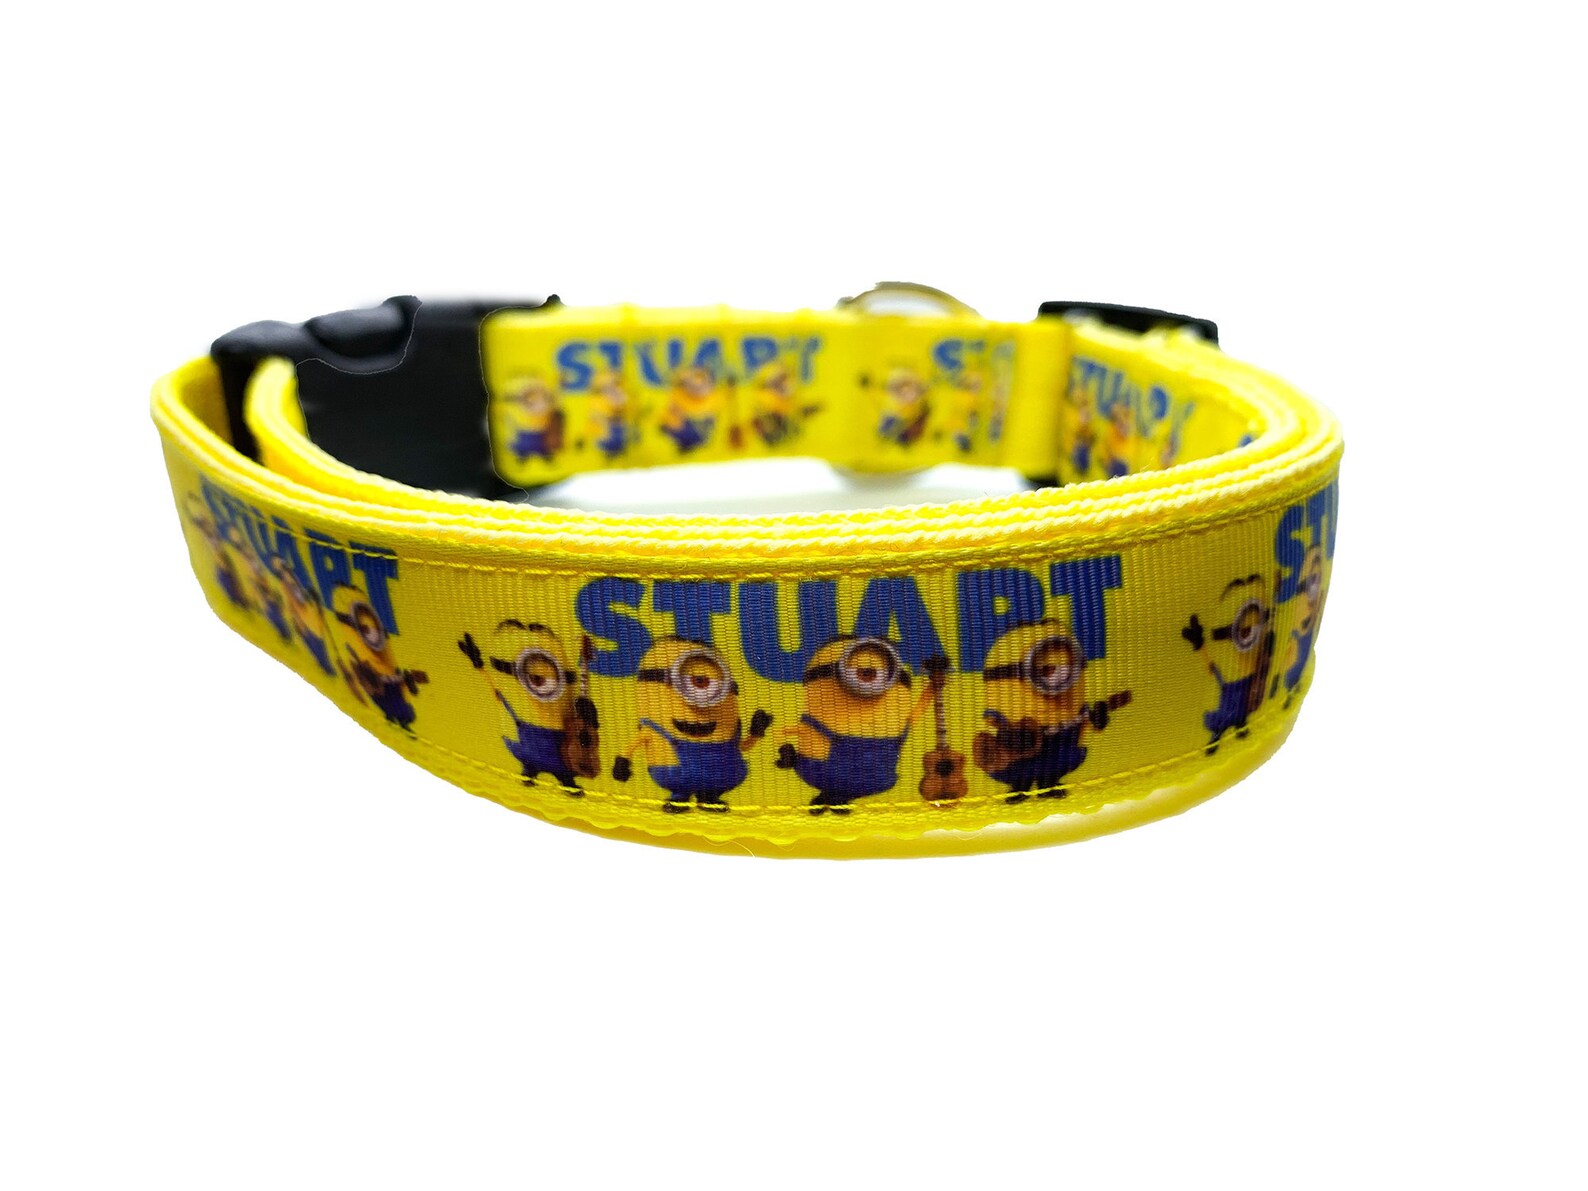 Stuart Minion Dog collar 1 inch width adjustable with | Etsy